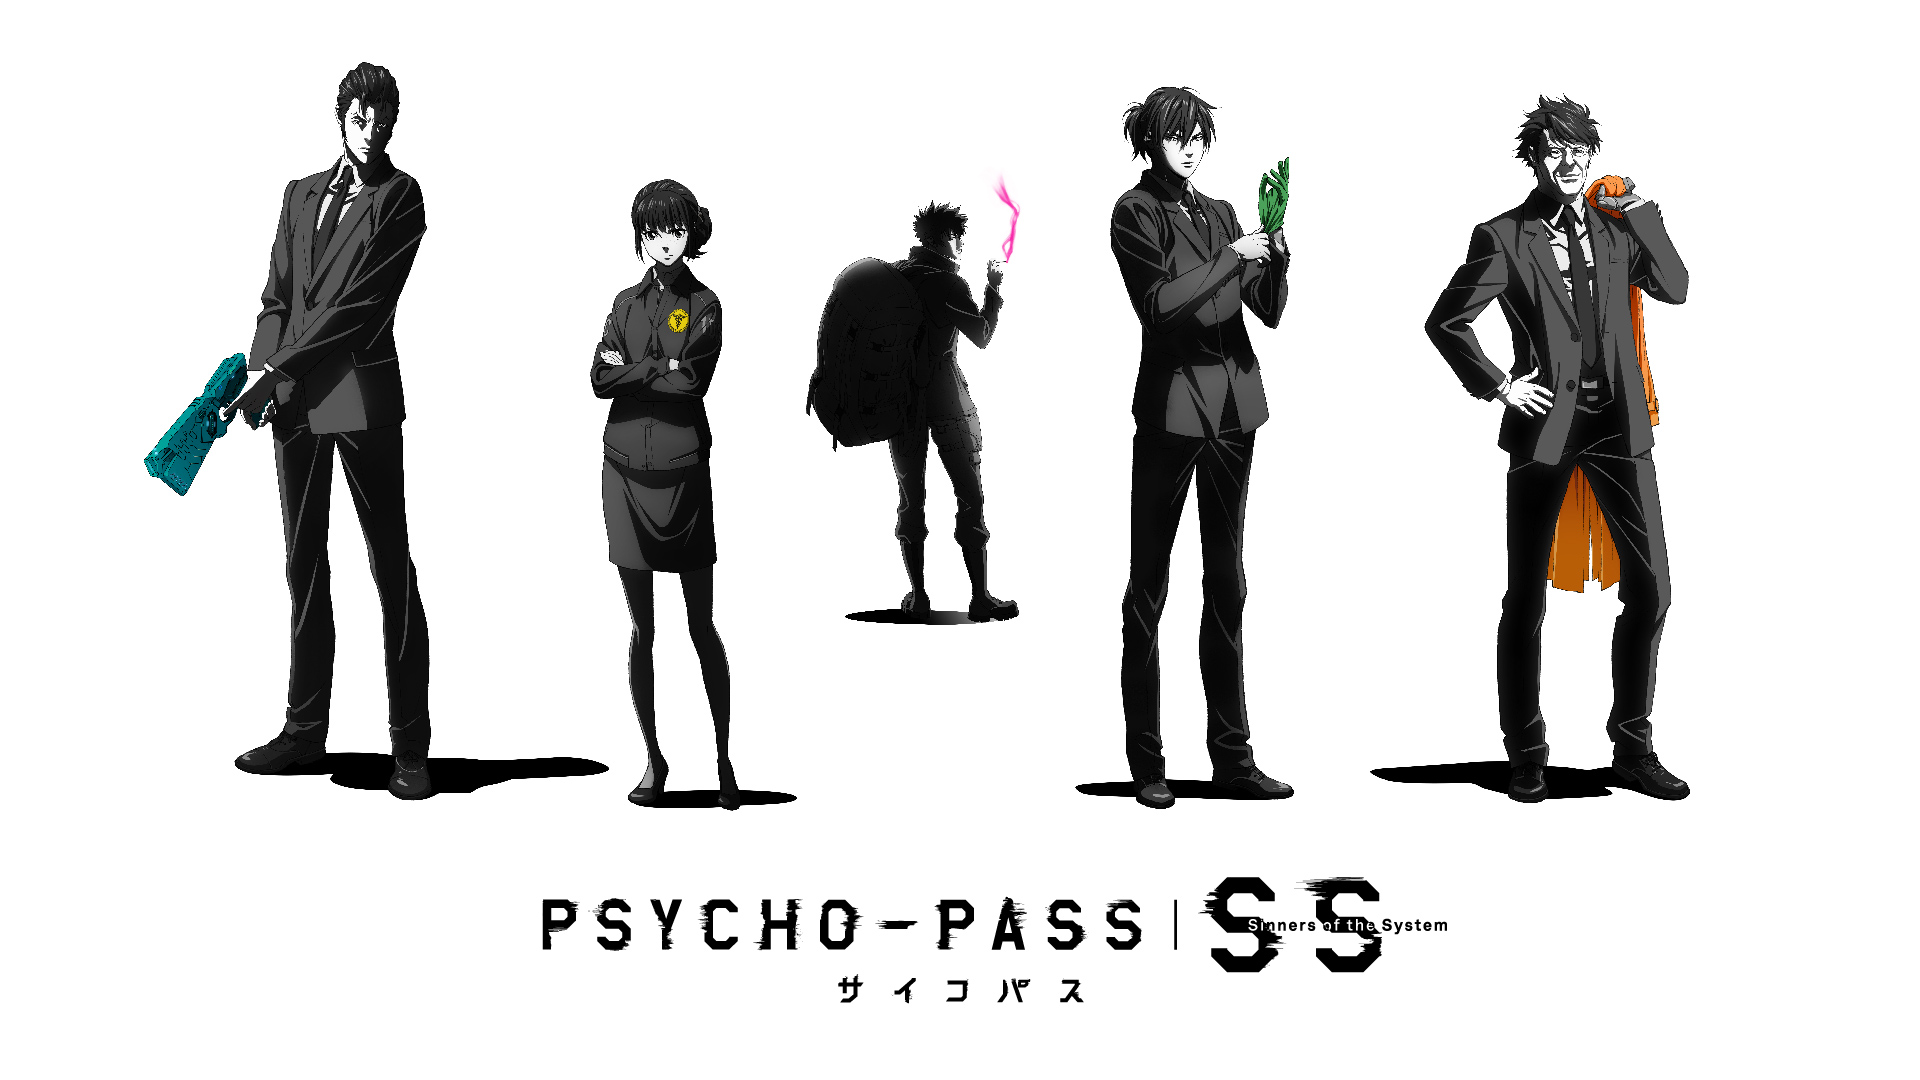 Psycho Pass サイコパス Next ニコニコニュース